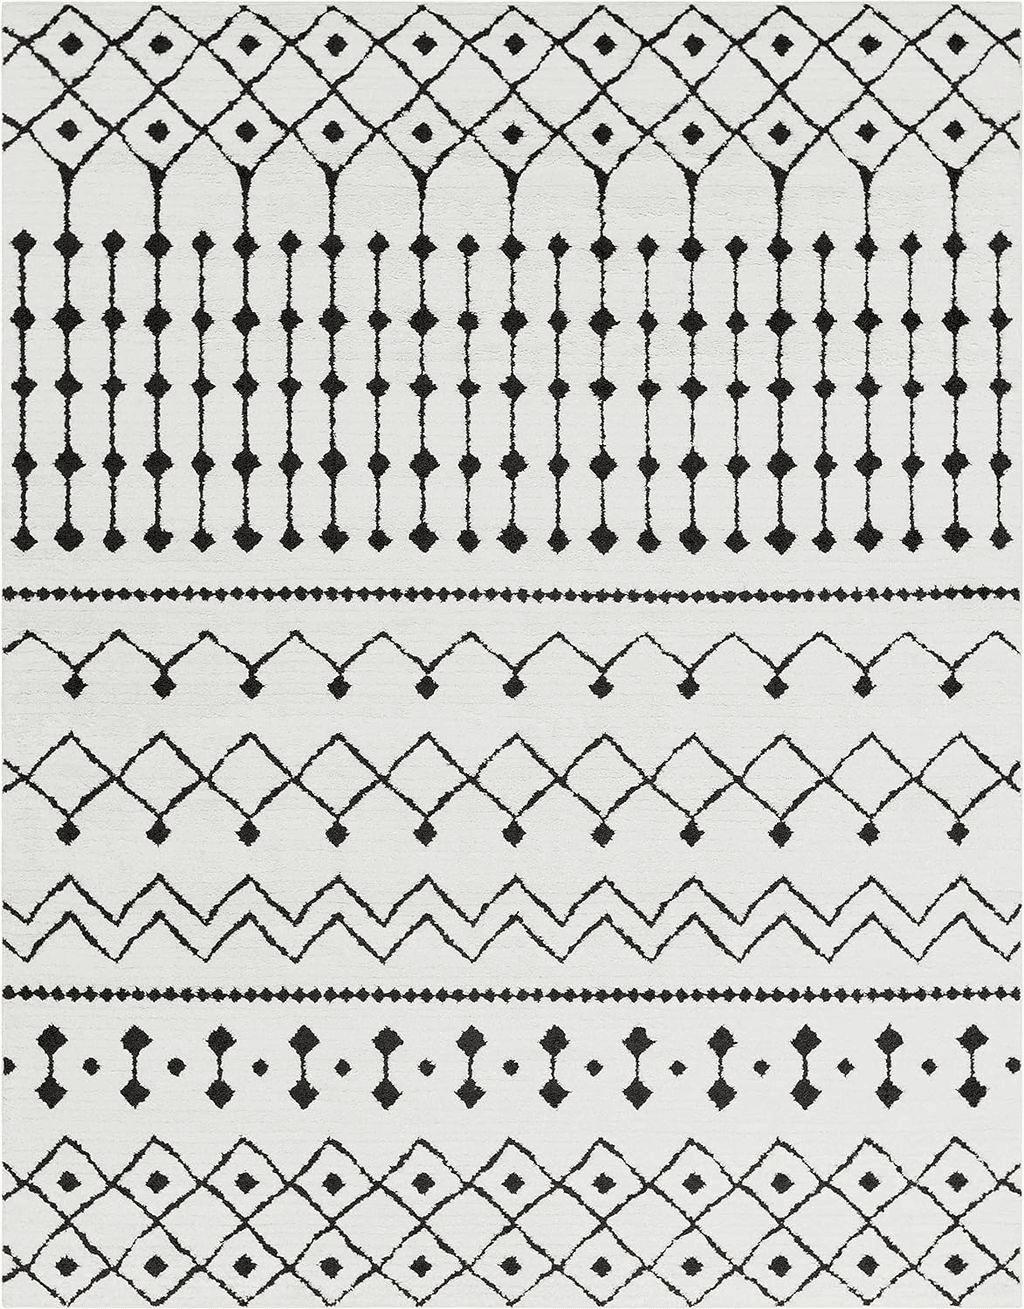 Bohemian White Hauteloom Ringwood 5' 3" x 7' 3" Moroccan Farmhouse Shag - Black, Charcoal, White Bohemian Area Rug - Rectangle - Polypropylene and Polyester Blend